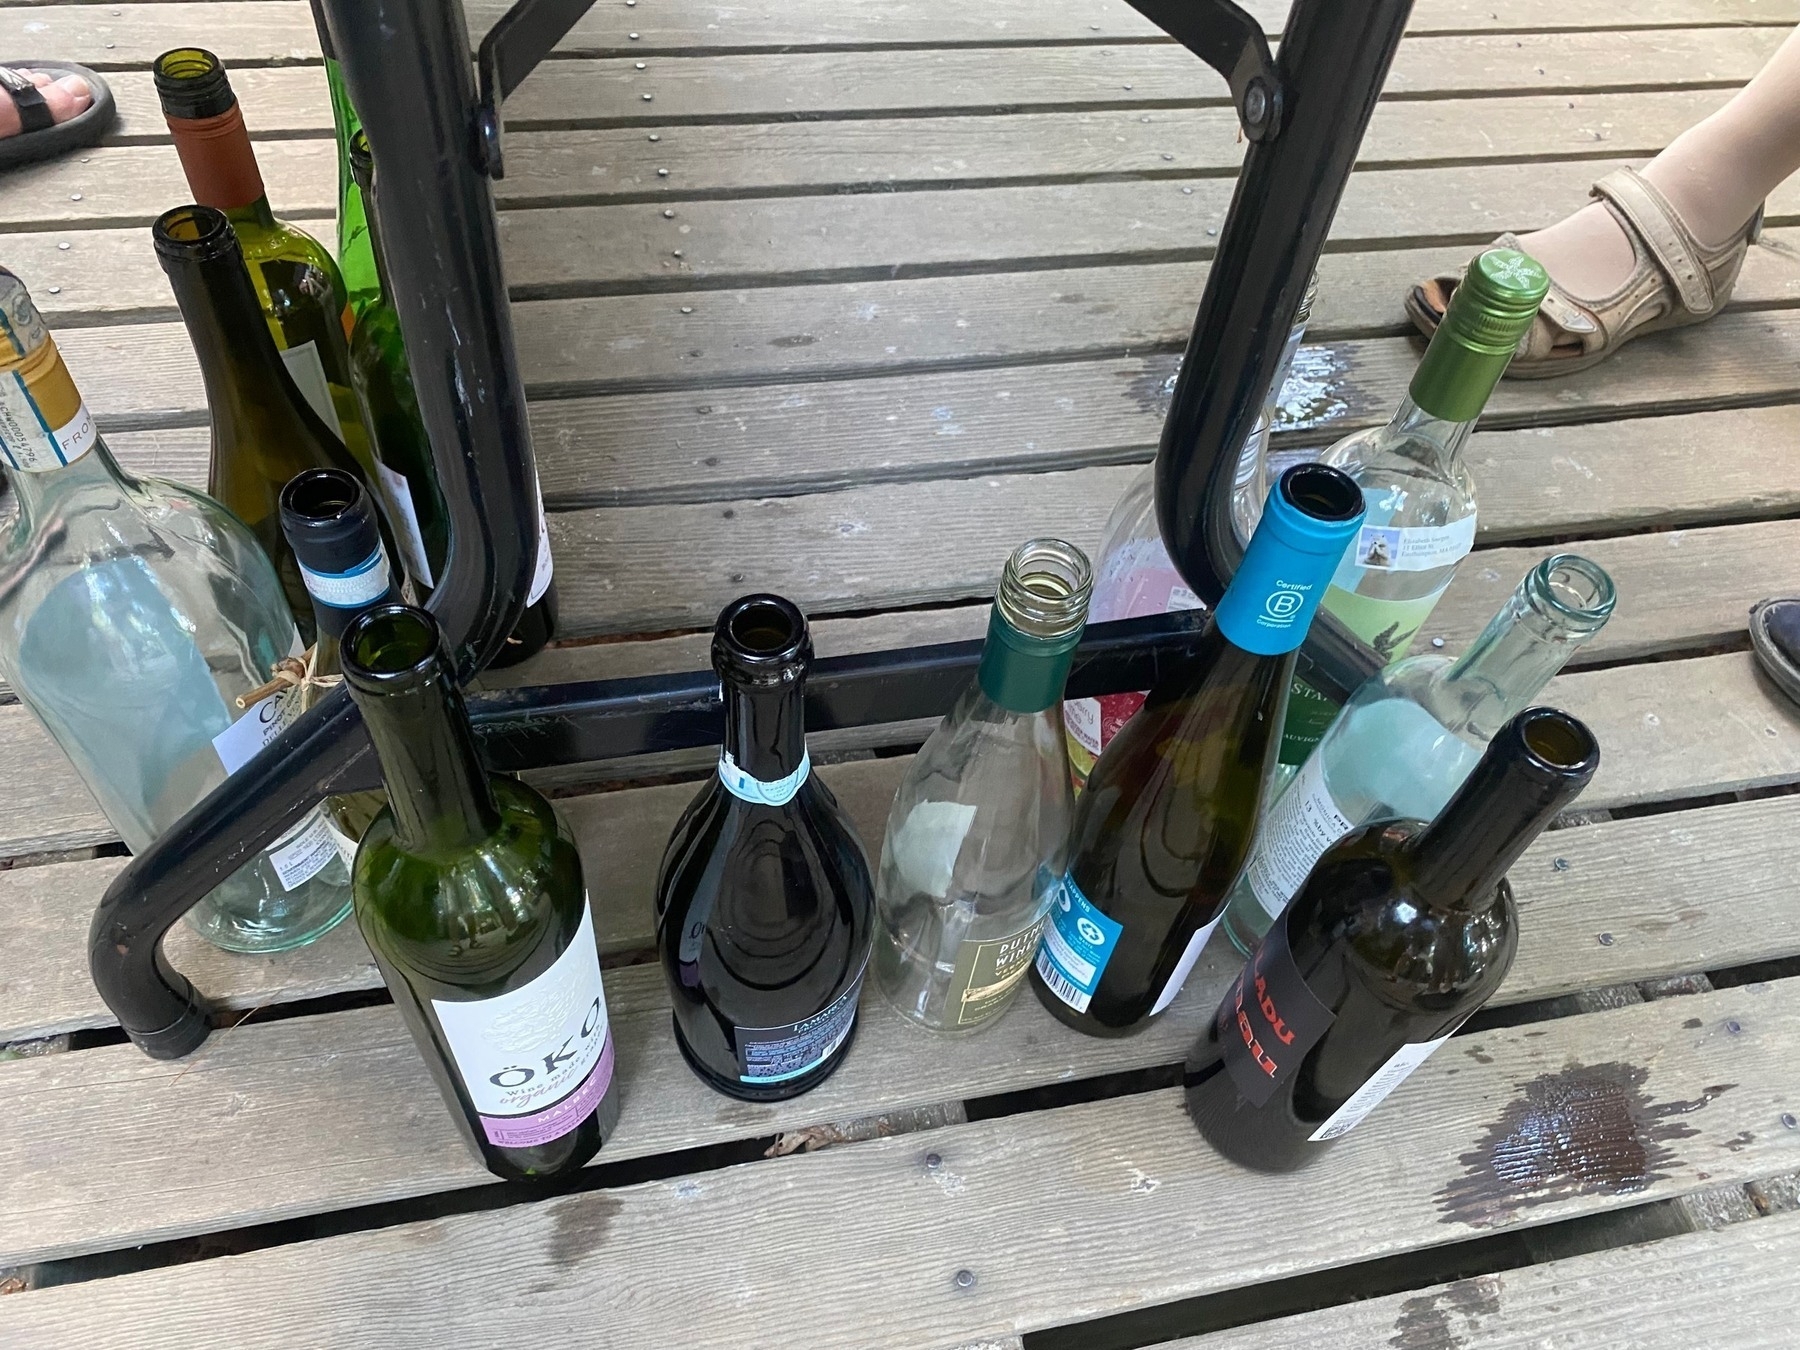 Empty wine bottles on a wooden porch.